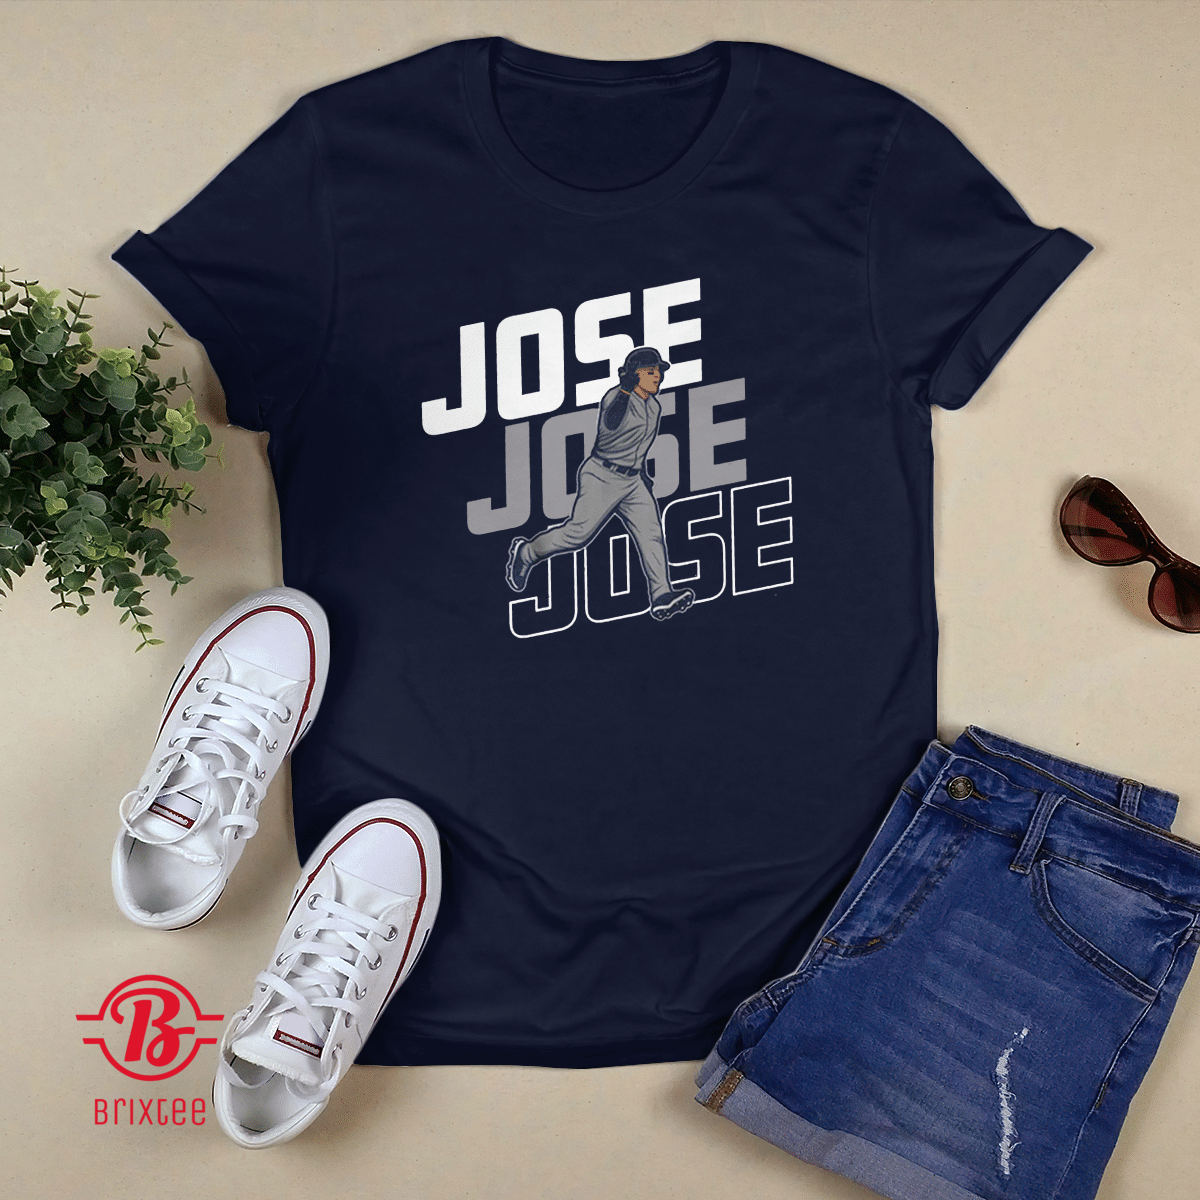 Jose Trevino: Jose Jose Jose | New York Yankees